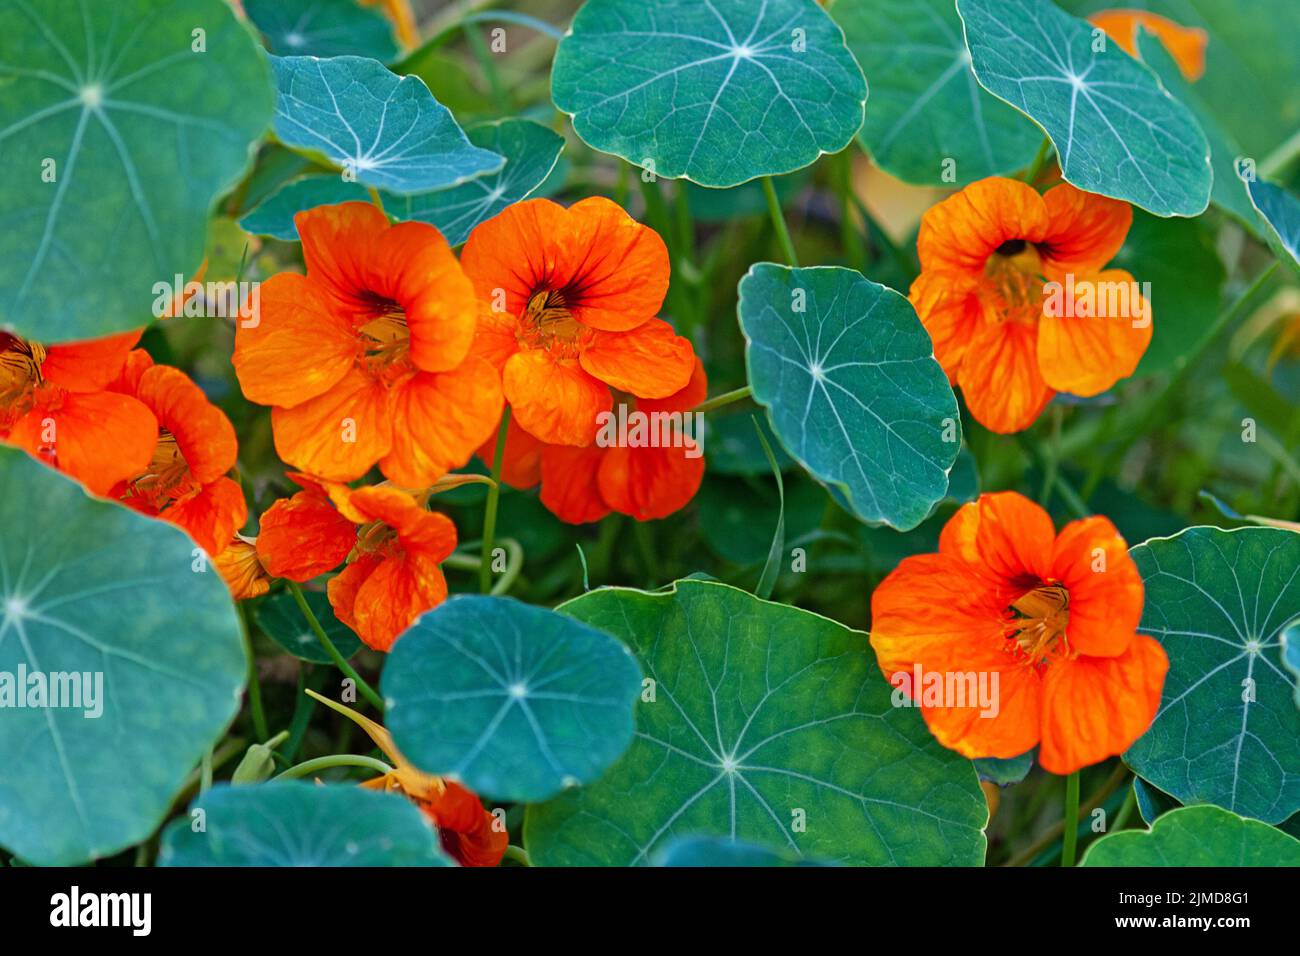 Nasturtium - South American trailing plNasturtium - South American trailing plant with round leaves and bright orange, yellow, o Stock Photo